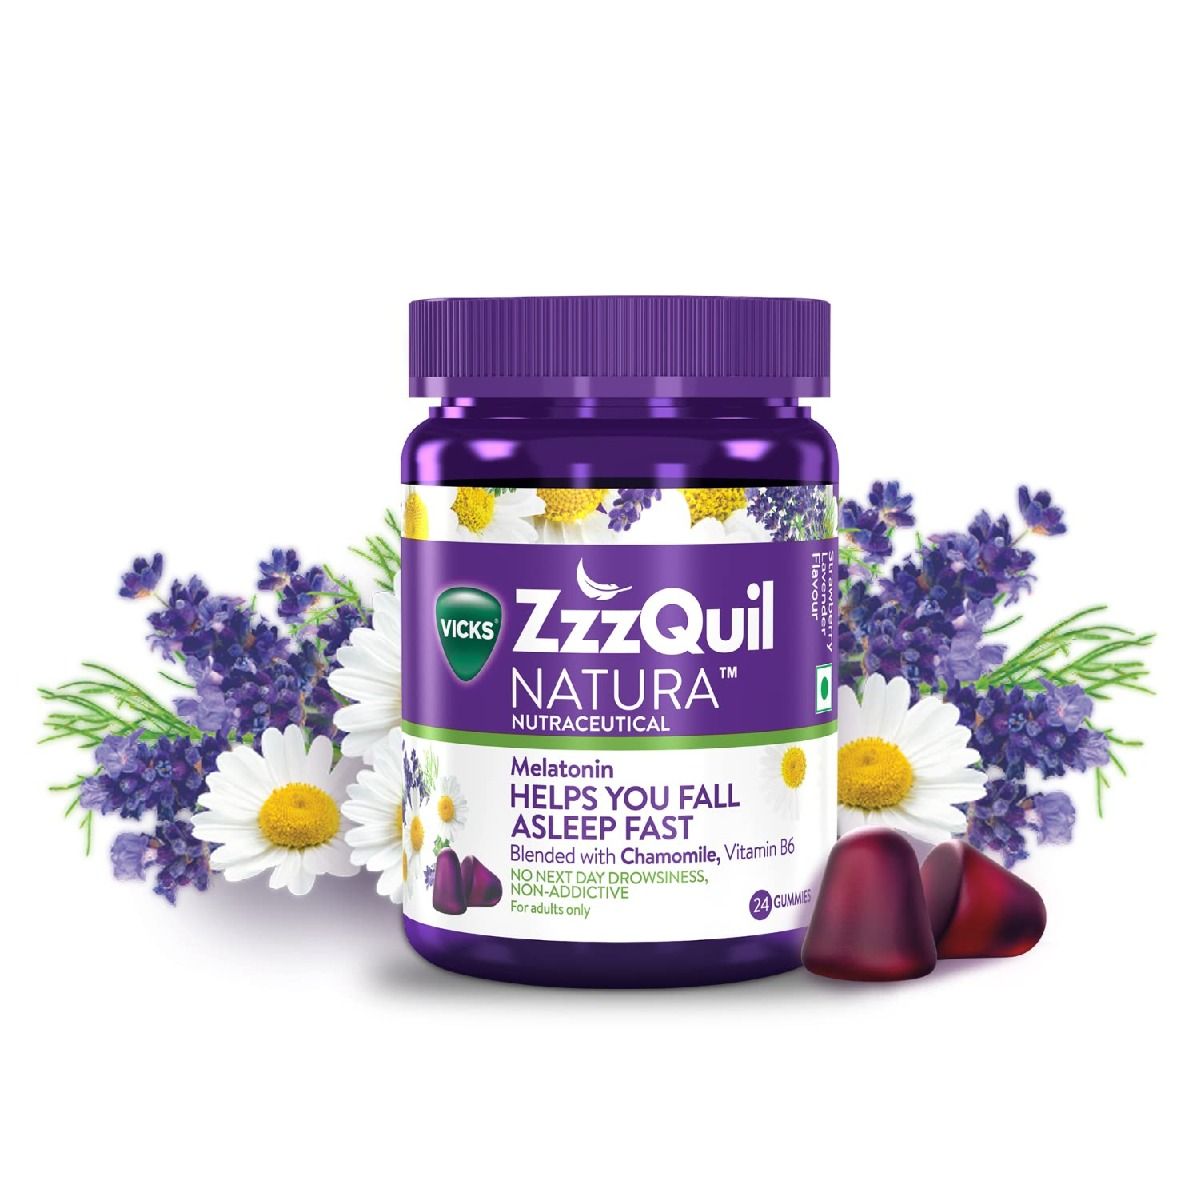 Buy Vicks ZzzQuil Natura Nutraceutical Melatonin Gummies, 24 Count Online